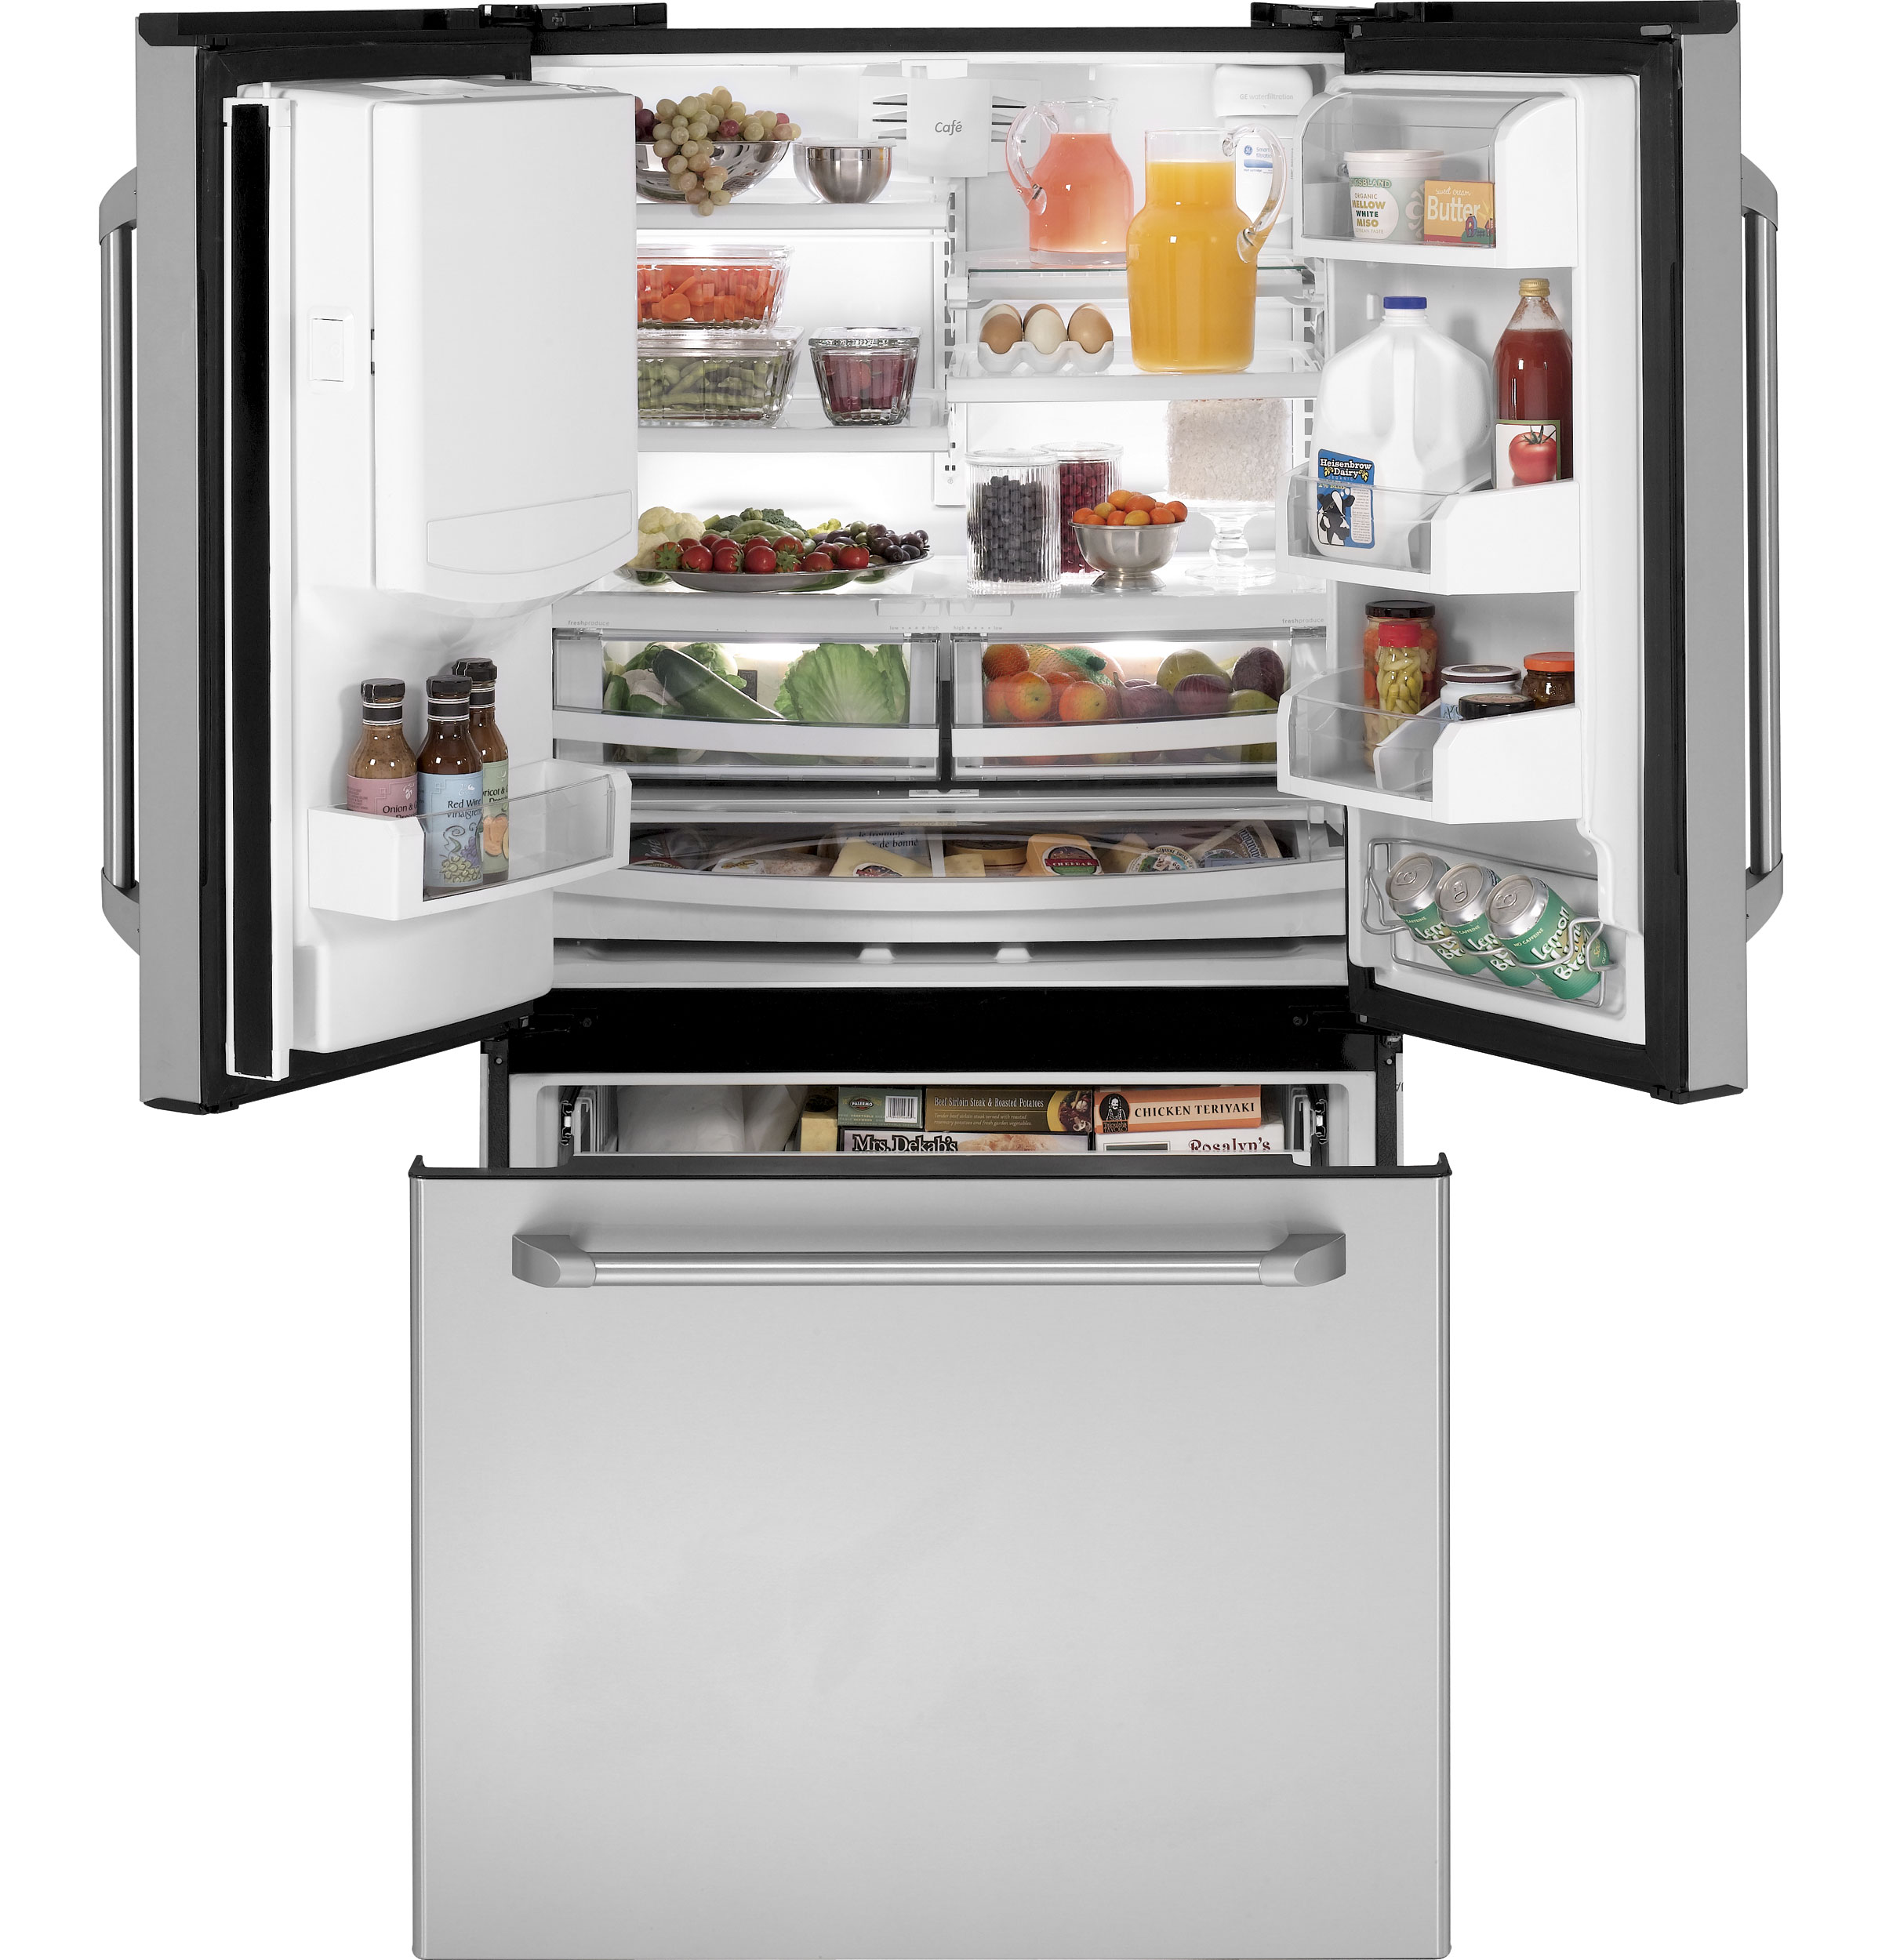 GE Café™ Series 21.3 Cu. Ft. Counter-Depth French-Door Refrigerator